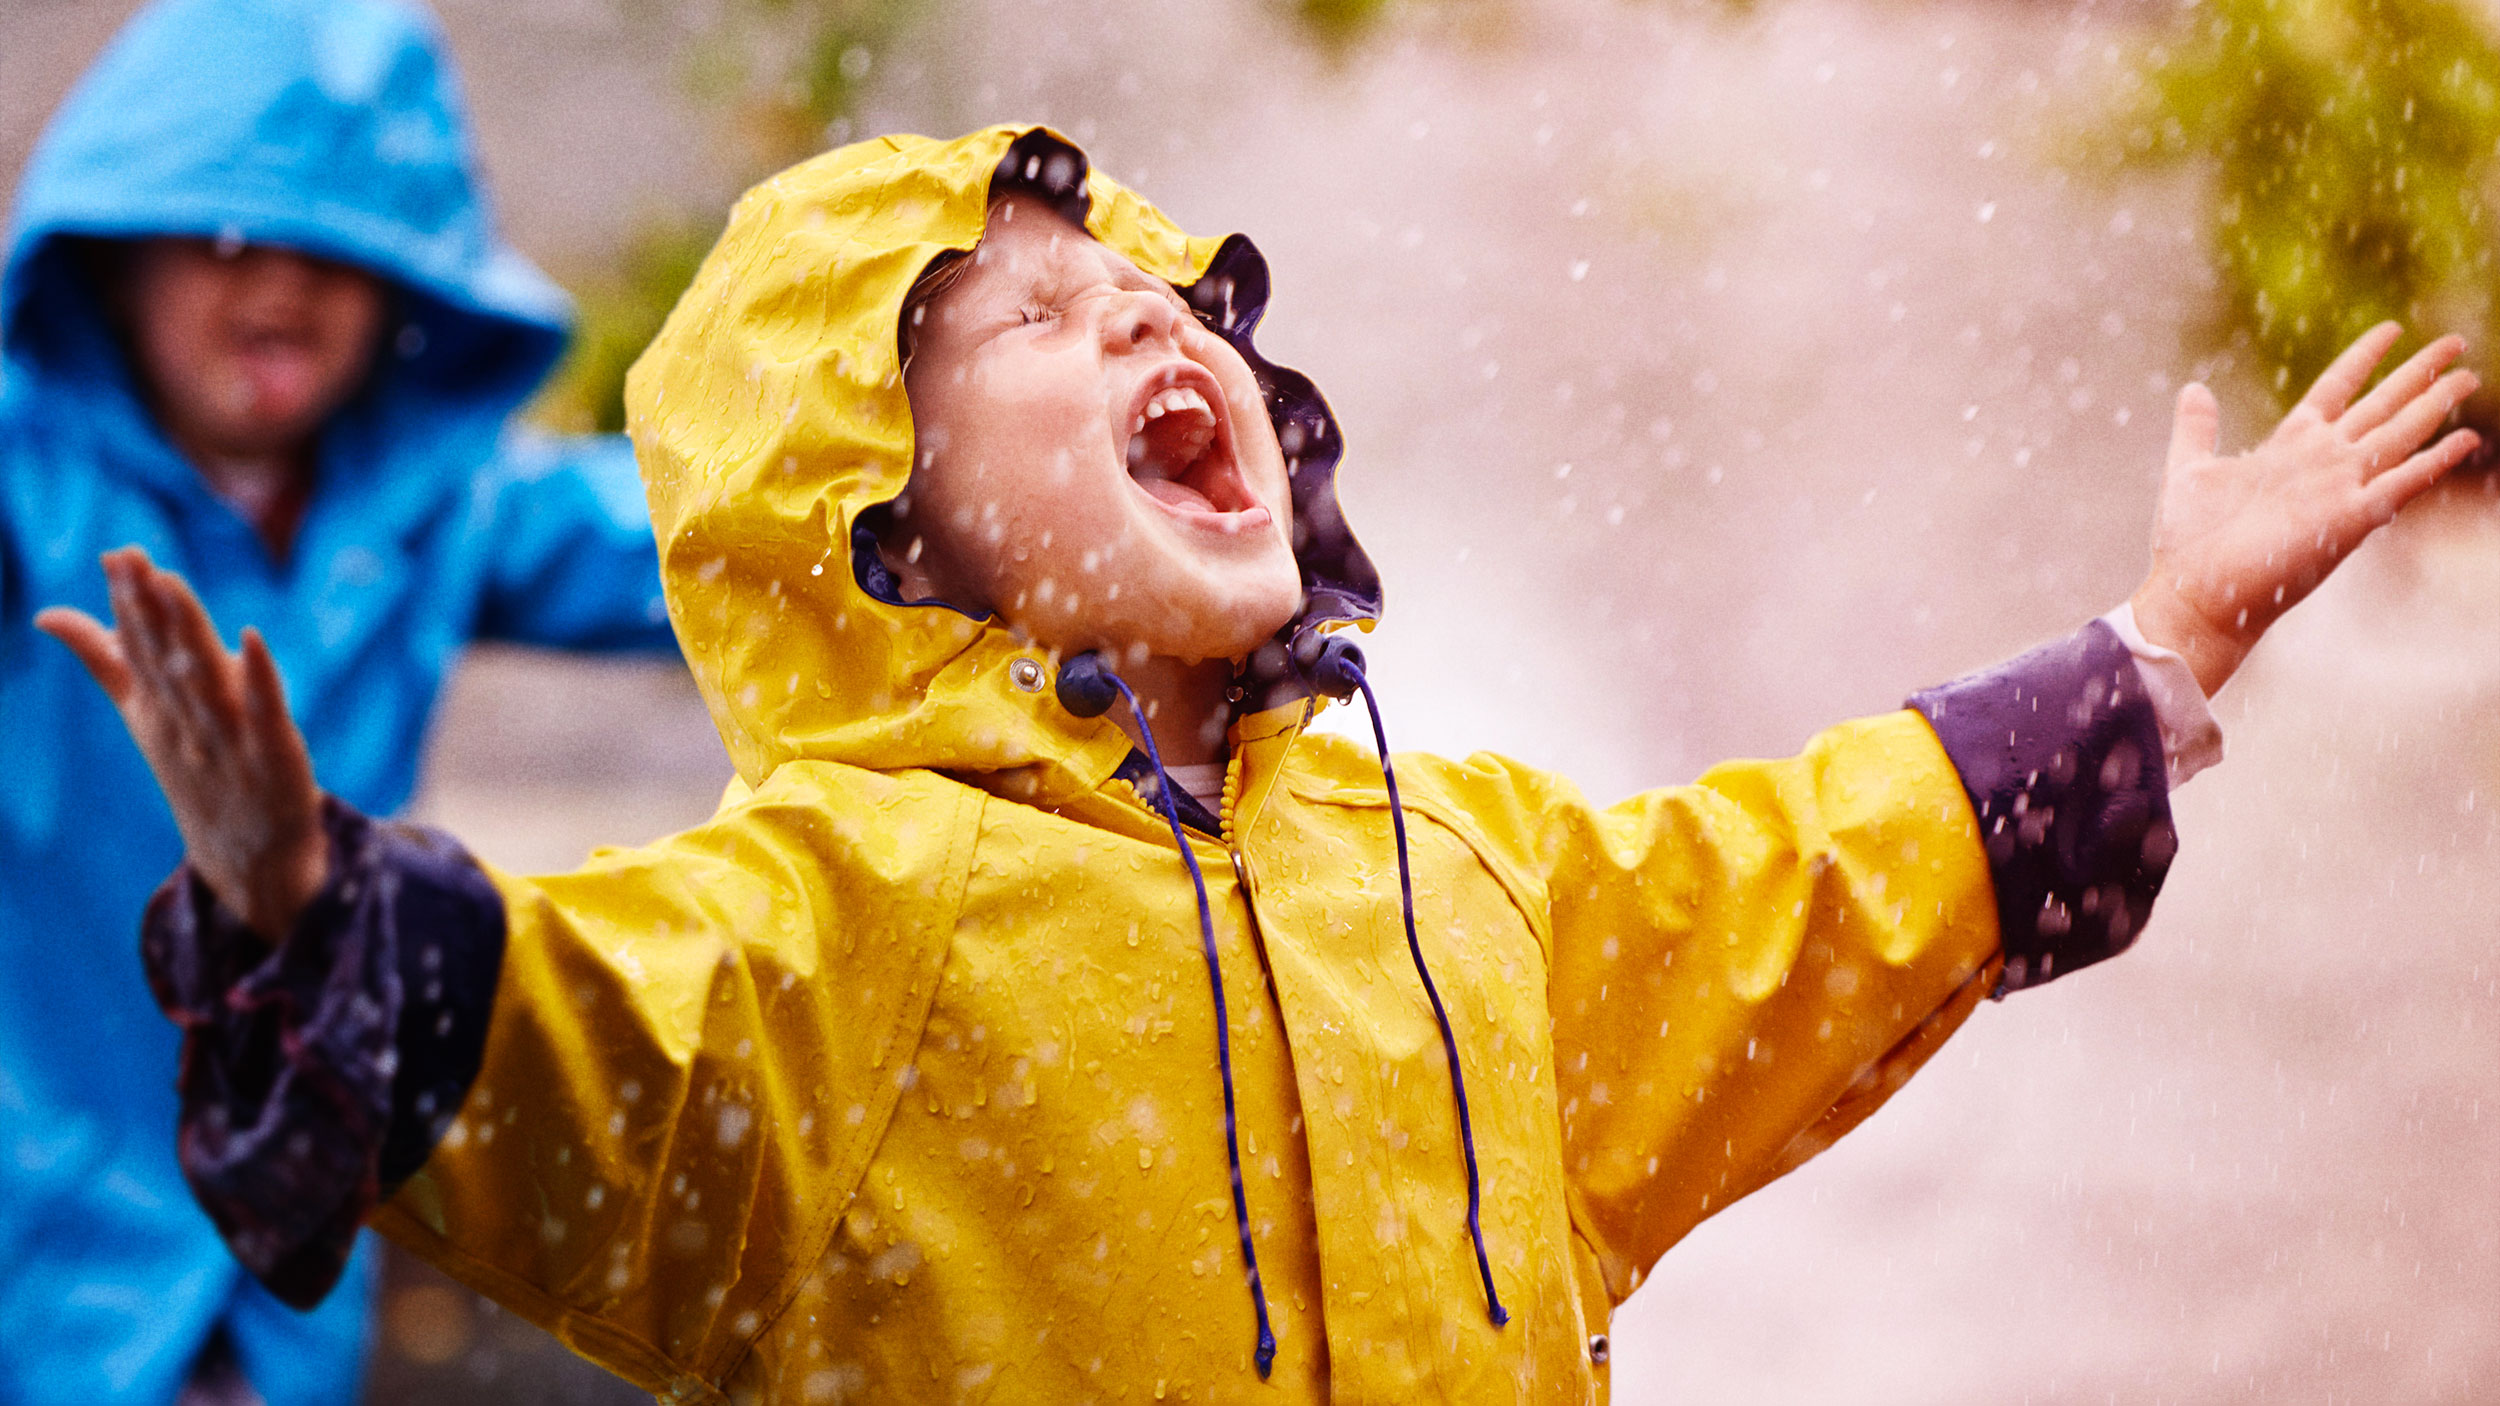 Happy child in the rain with yellow rain coat